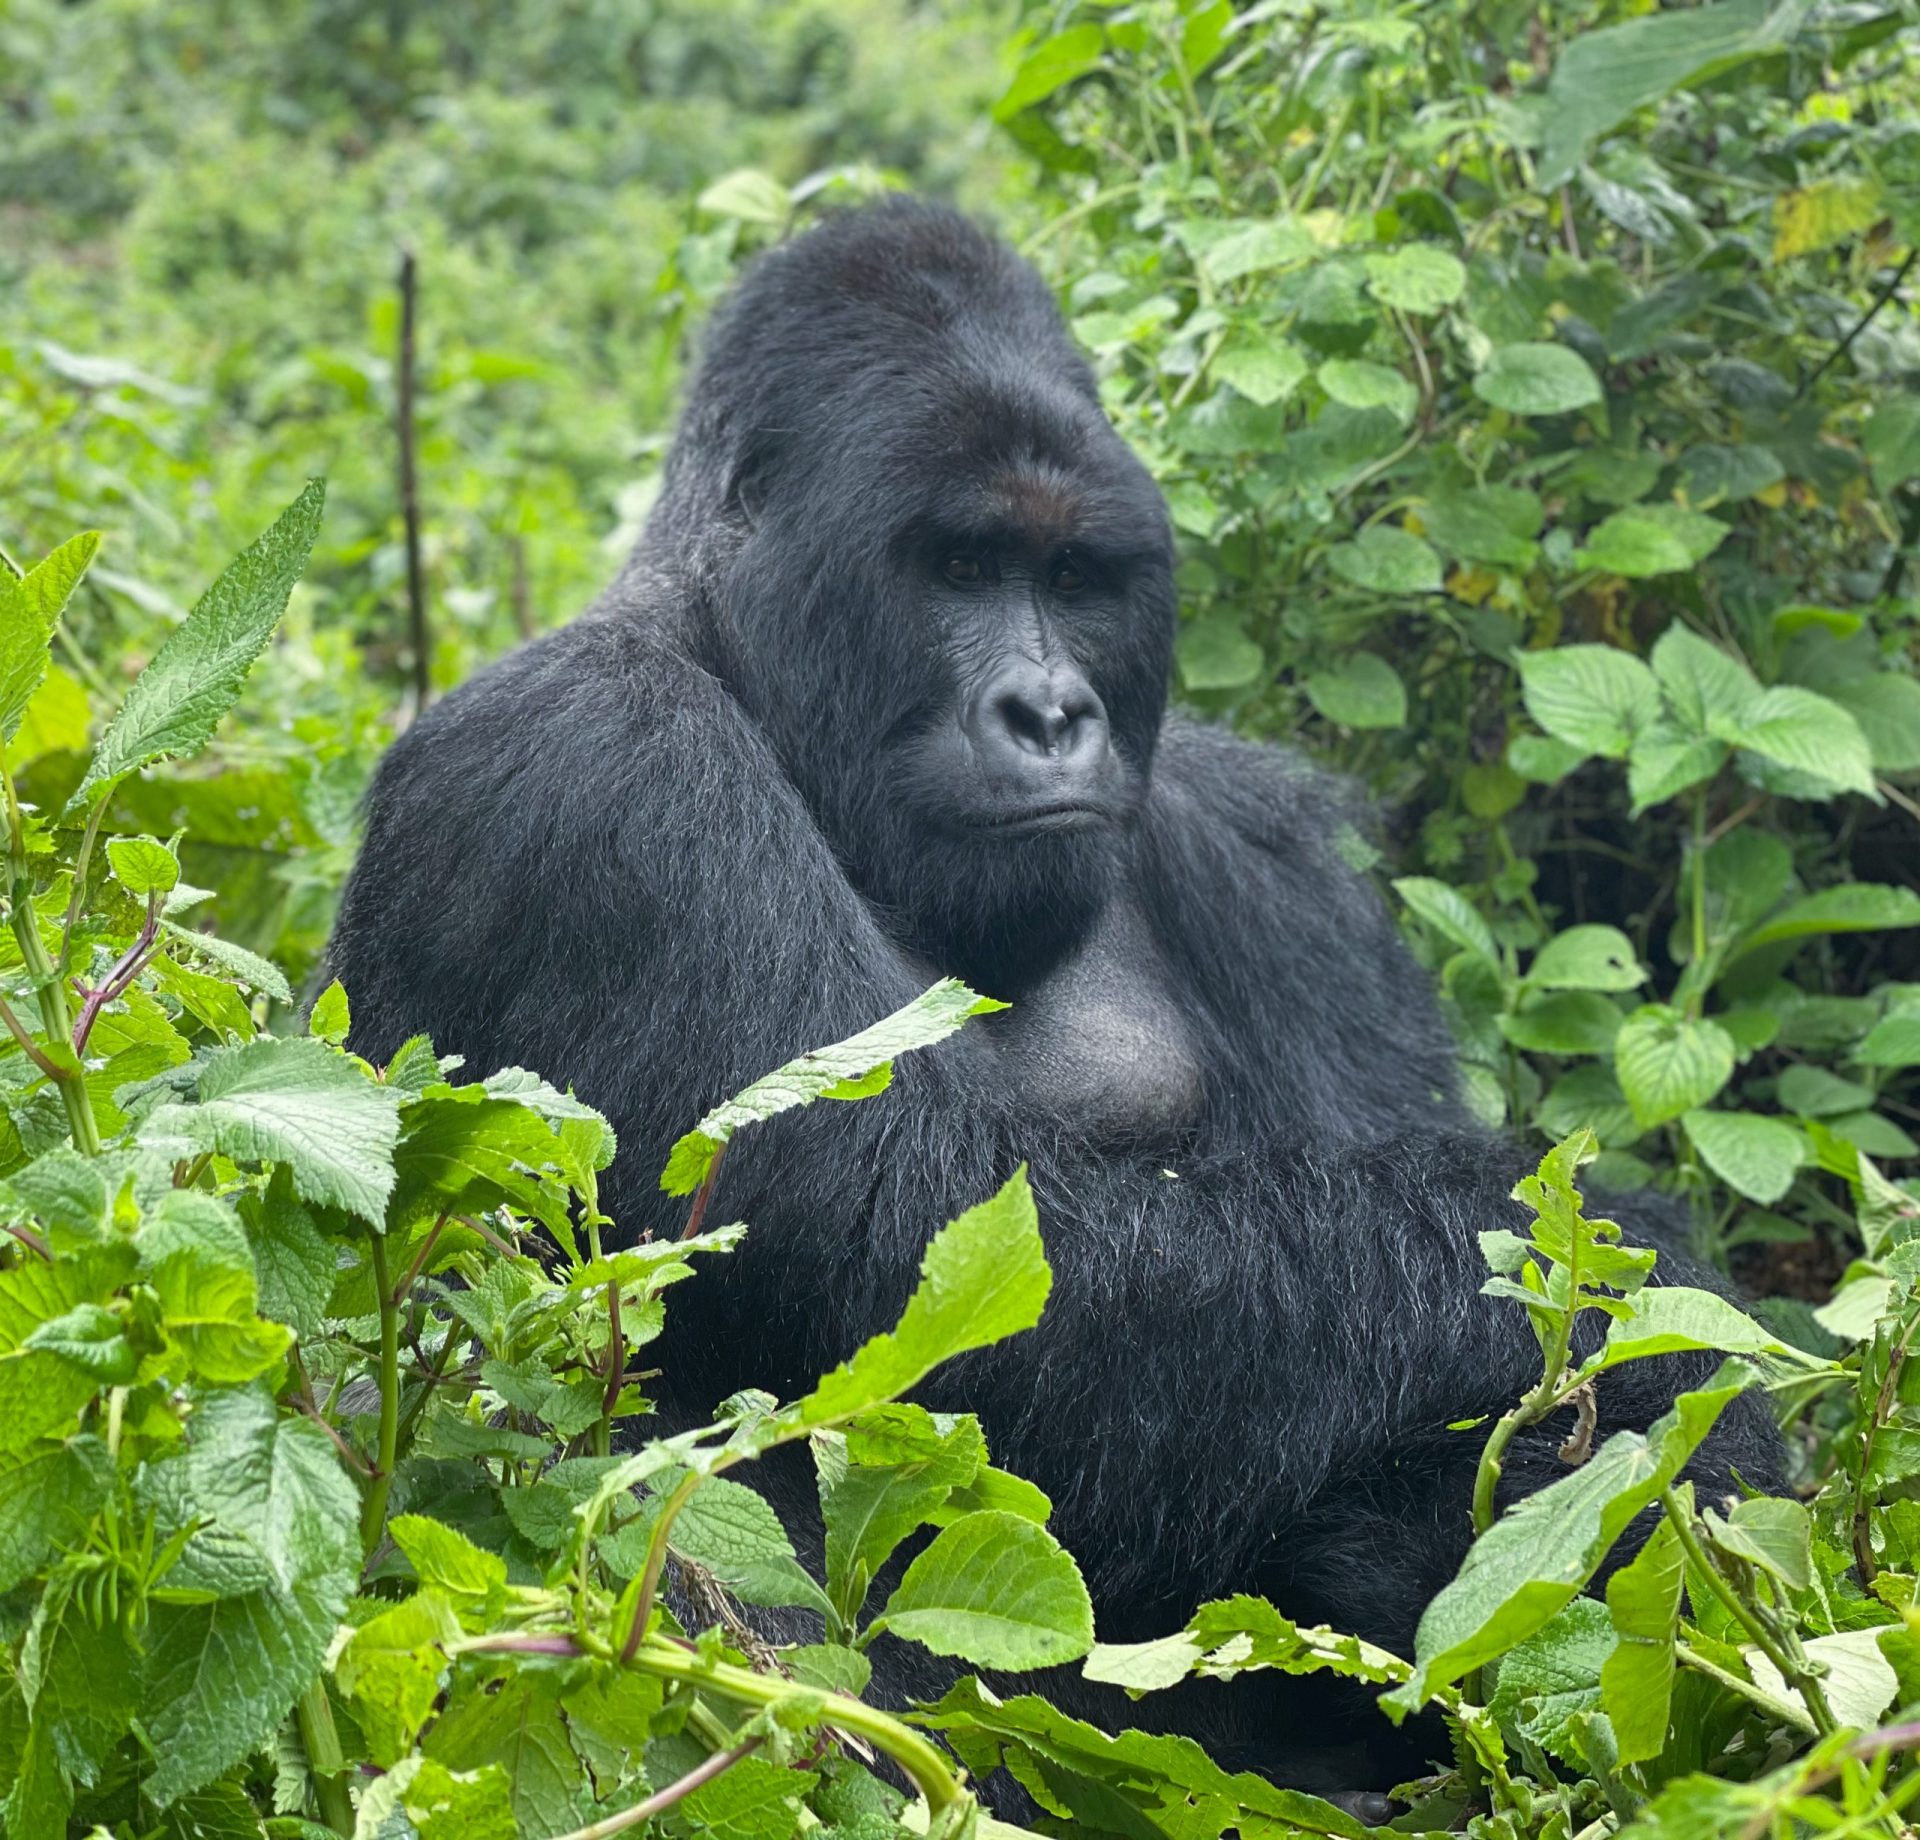 Reasons for Gorilla Trekking in Uganda 2022 